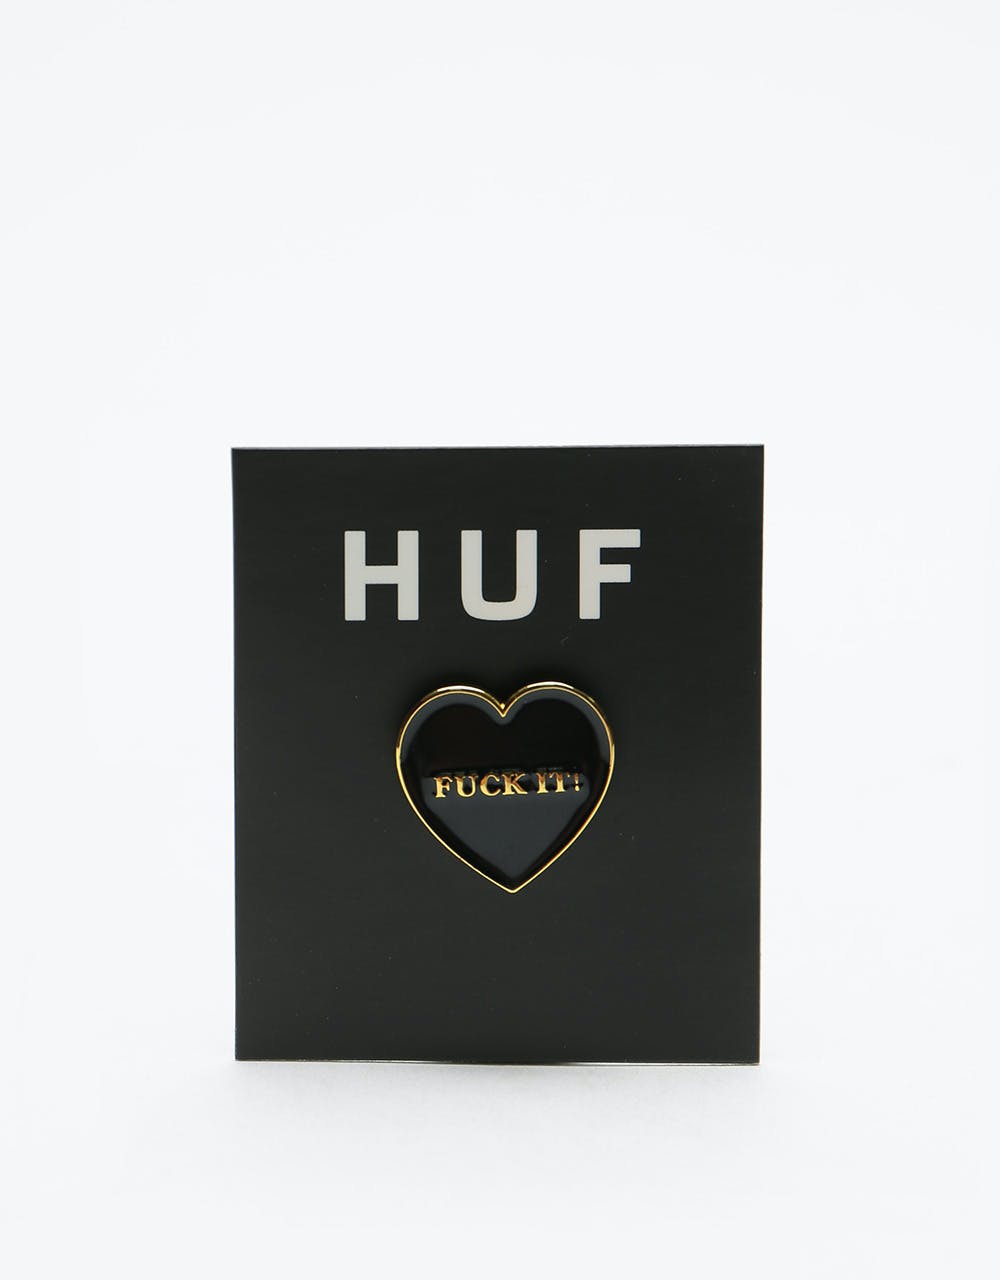 HUF Fuck It Heart Pin - Black